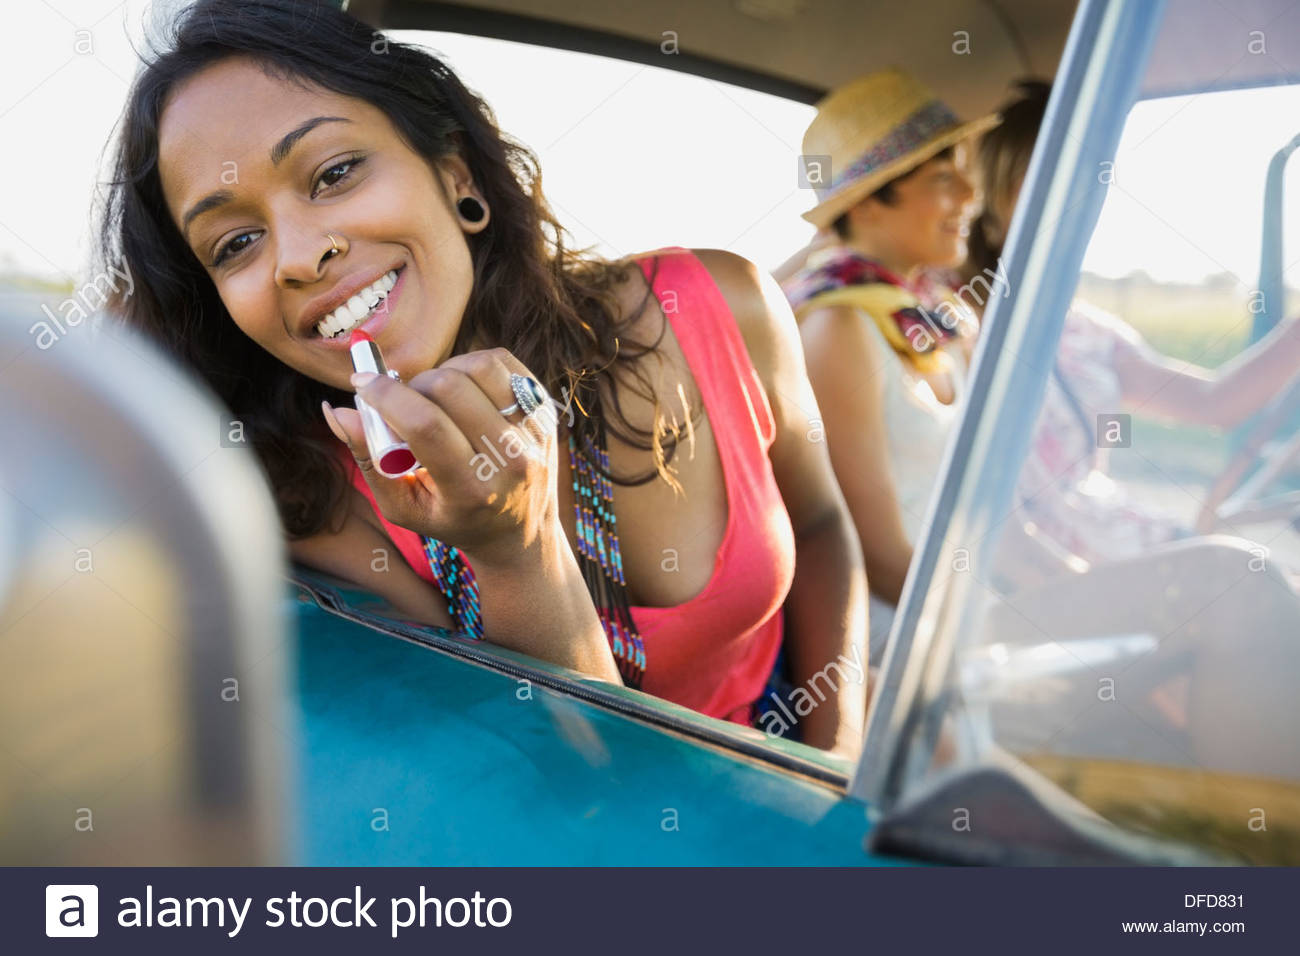 Woman applying lipstick in rear view mirror Stock Photo